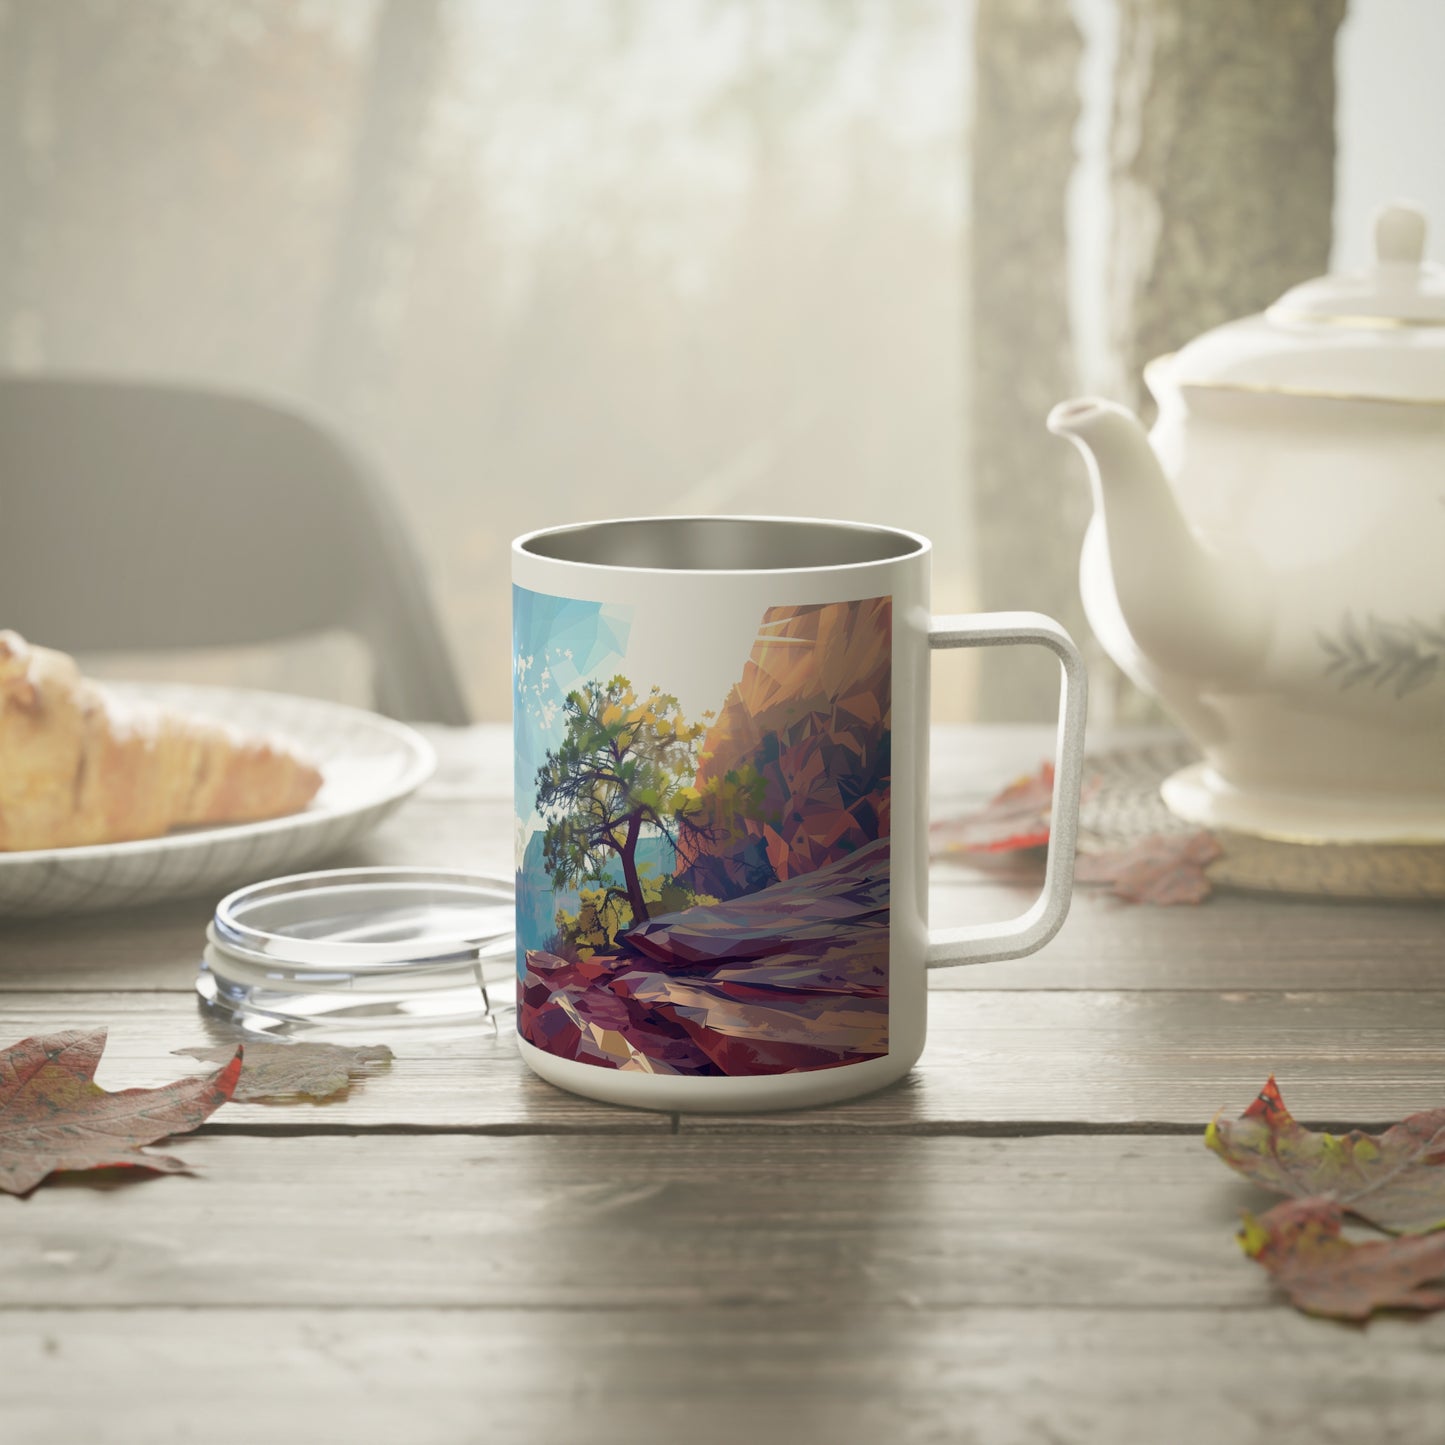 Insulated Coffee Mug with Zion National Park Design, 10 oz